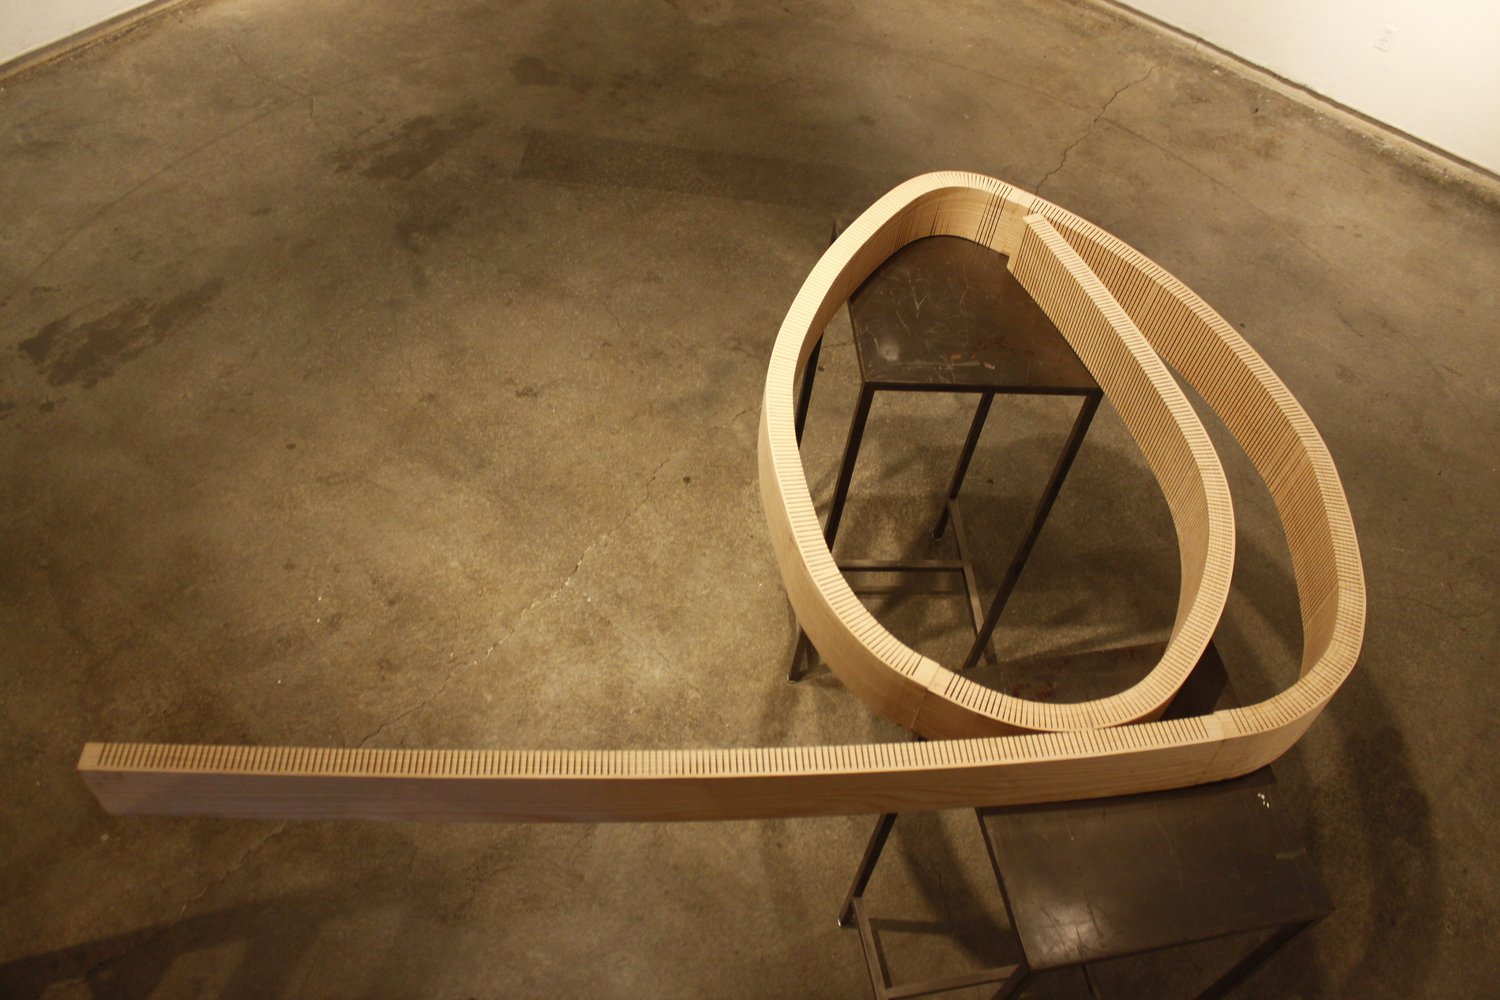  Untitled (cure cut circle), 2011, white ash wood, 5” x 7’ x 5’ 